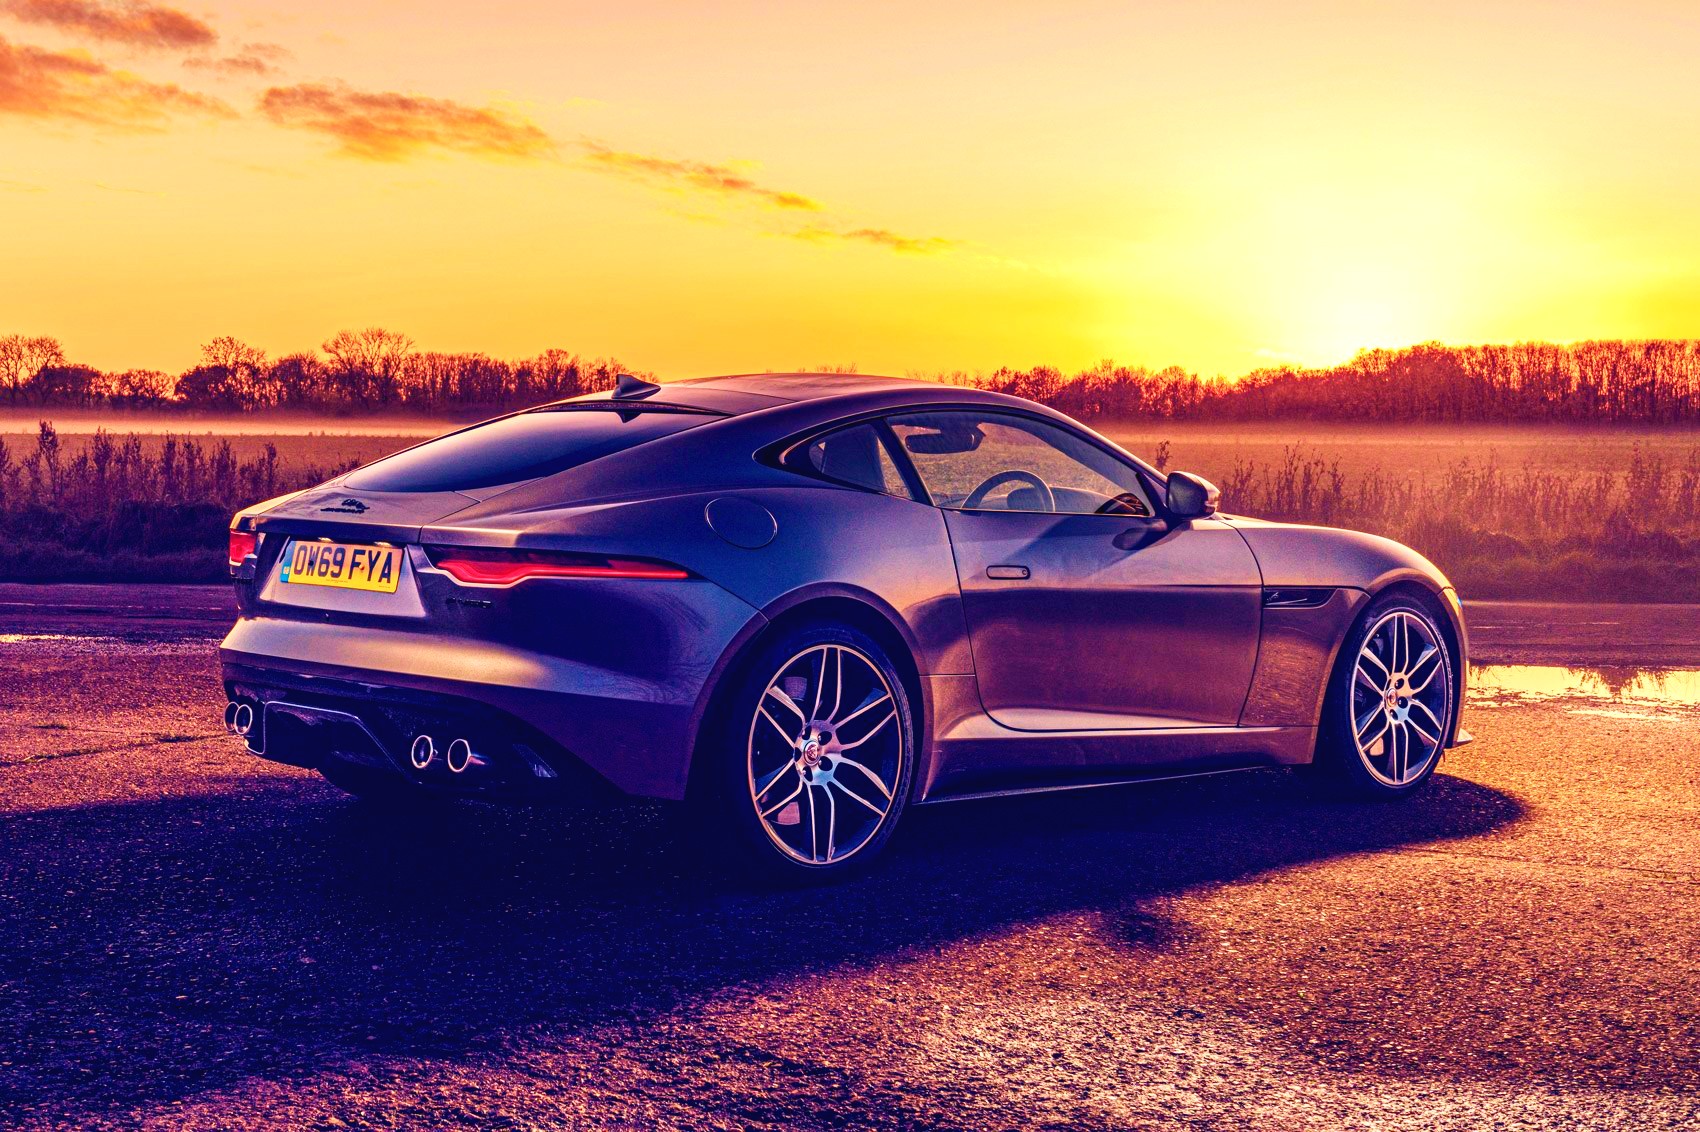 <img src="sleek.jpg" alt="sleek car on sunset autumn drive"/>